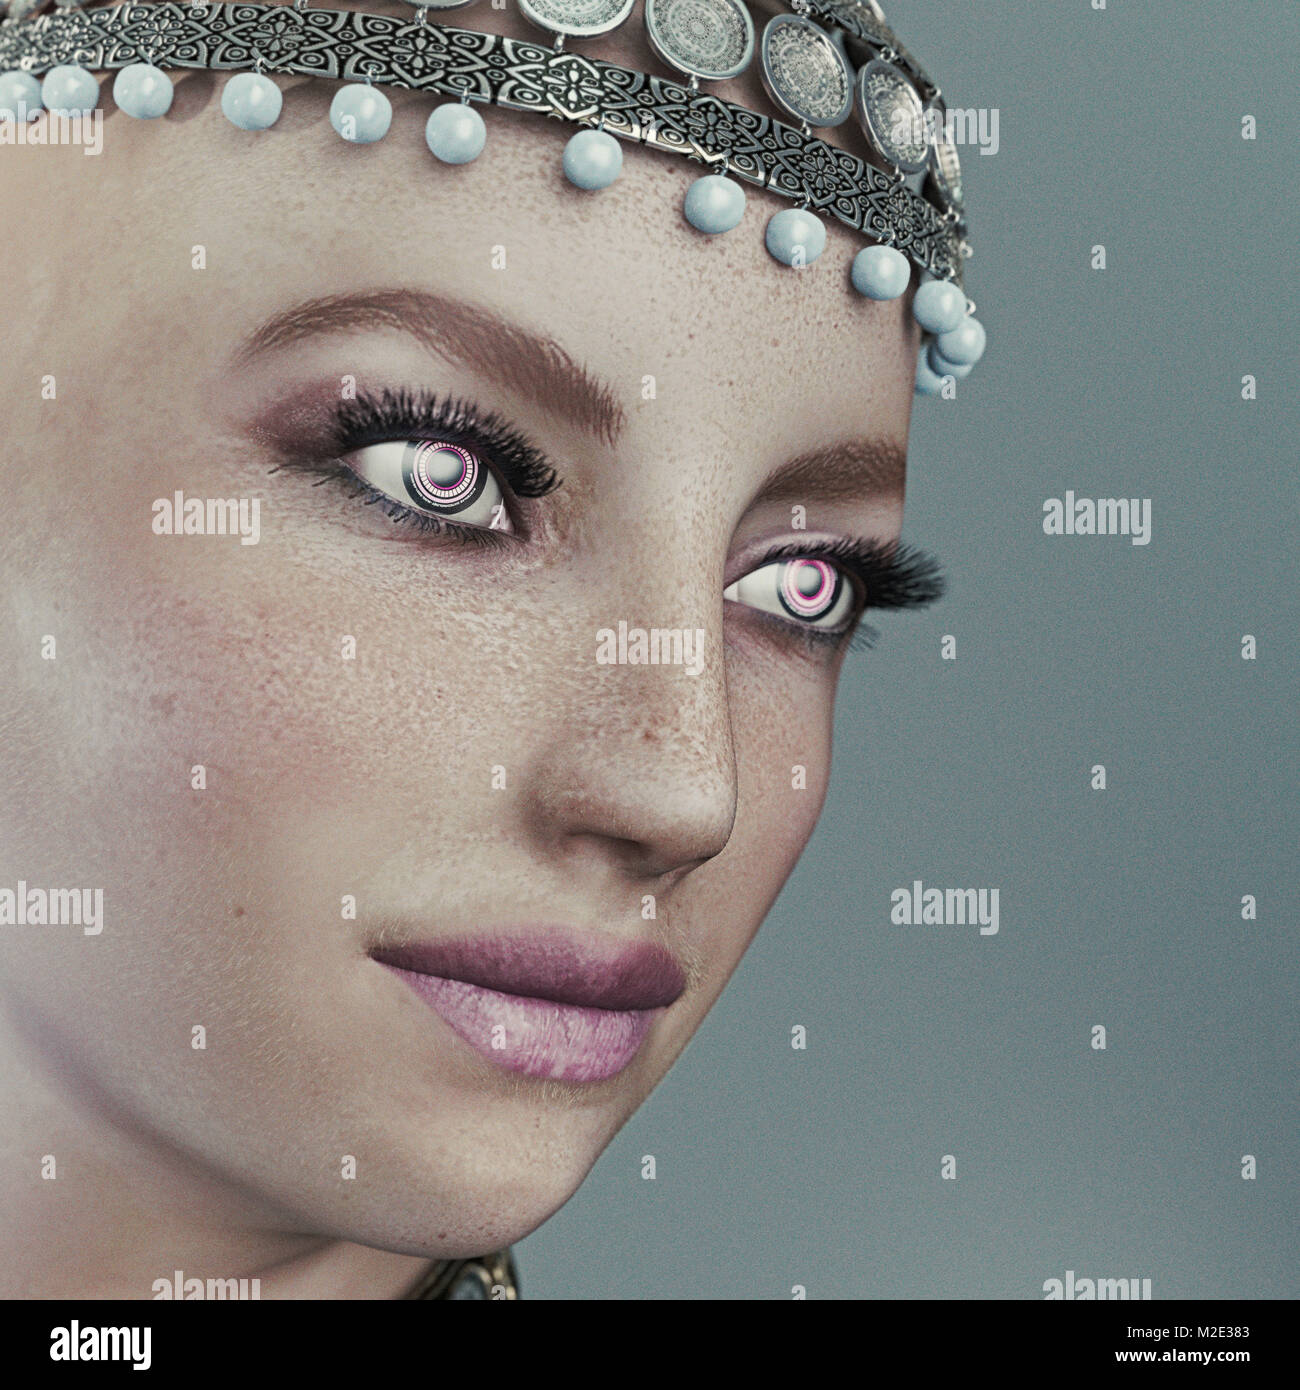 Face of futuristic woman wearing ornate headpiece Stock Photo